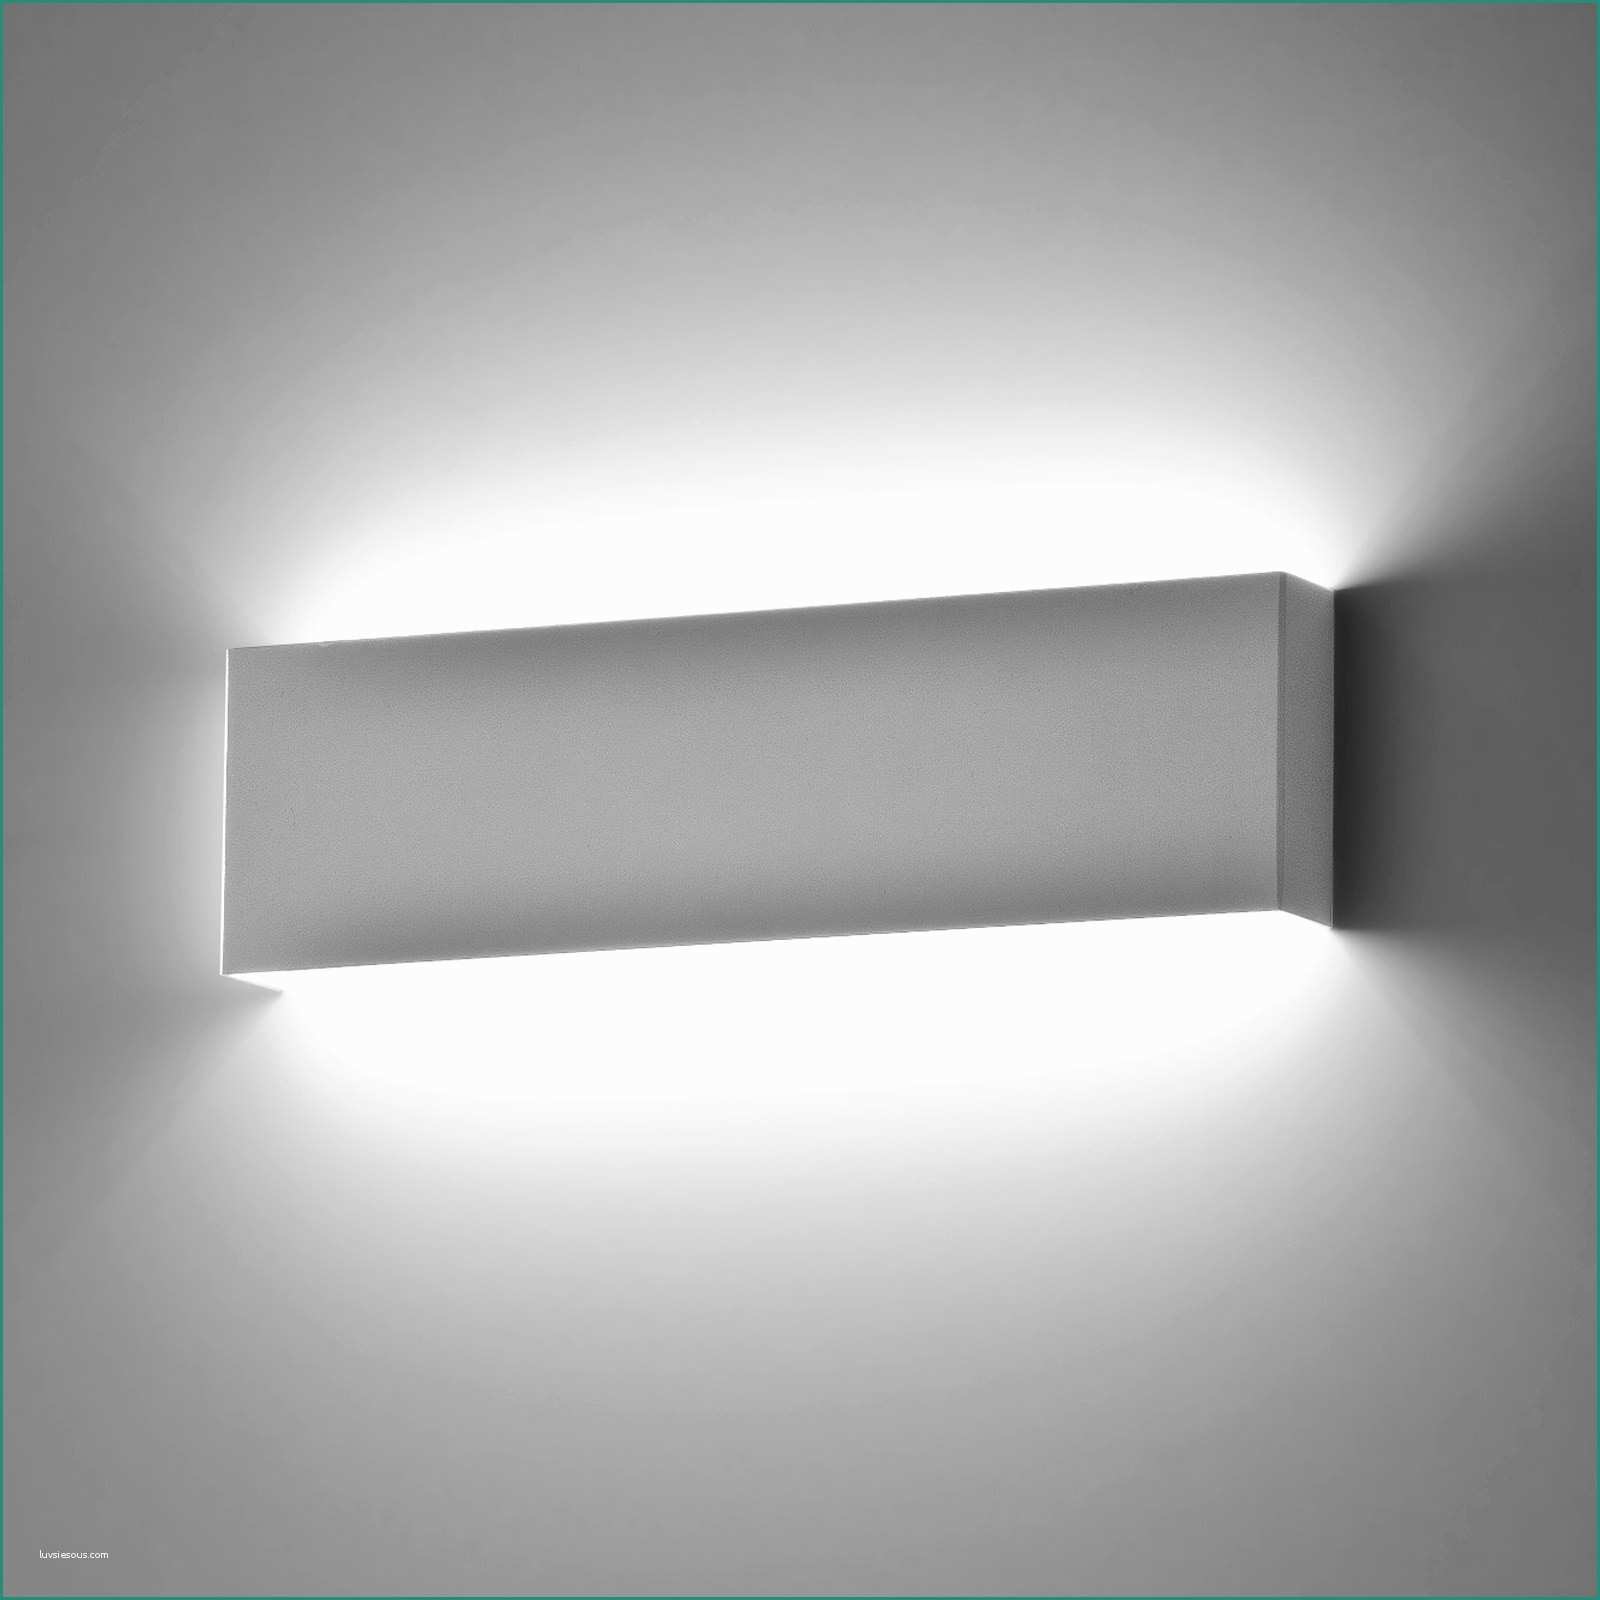 Lampada Con Sensore Di Movimento Leroy Merlin E Applique Lampada Da Parete A Led Moderno Luce Calda Bianco